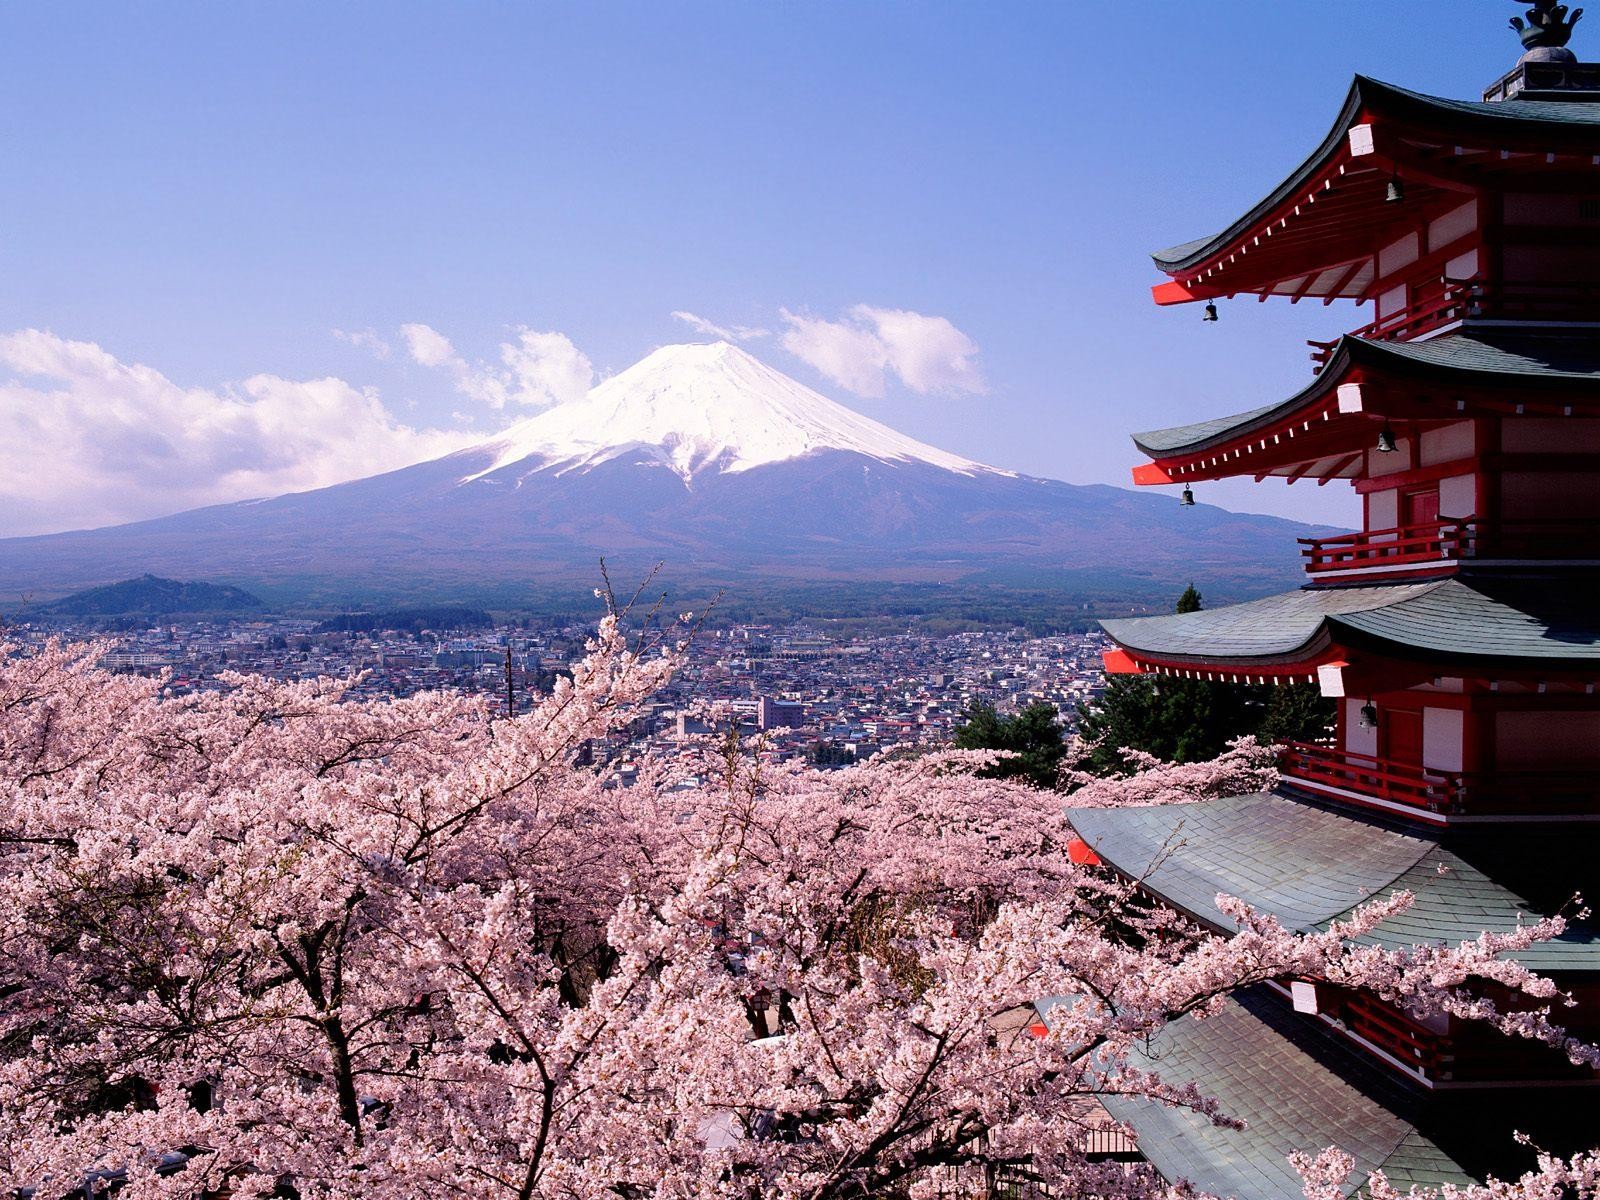 General 1600x1200 landscape Mount Fuji Asian architecture cherry blossom trees Japan Hirosaki Castle Asia building